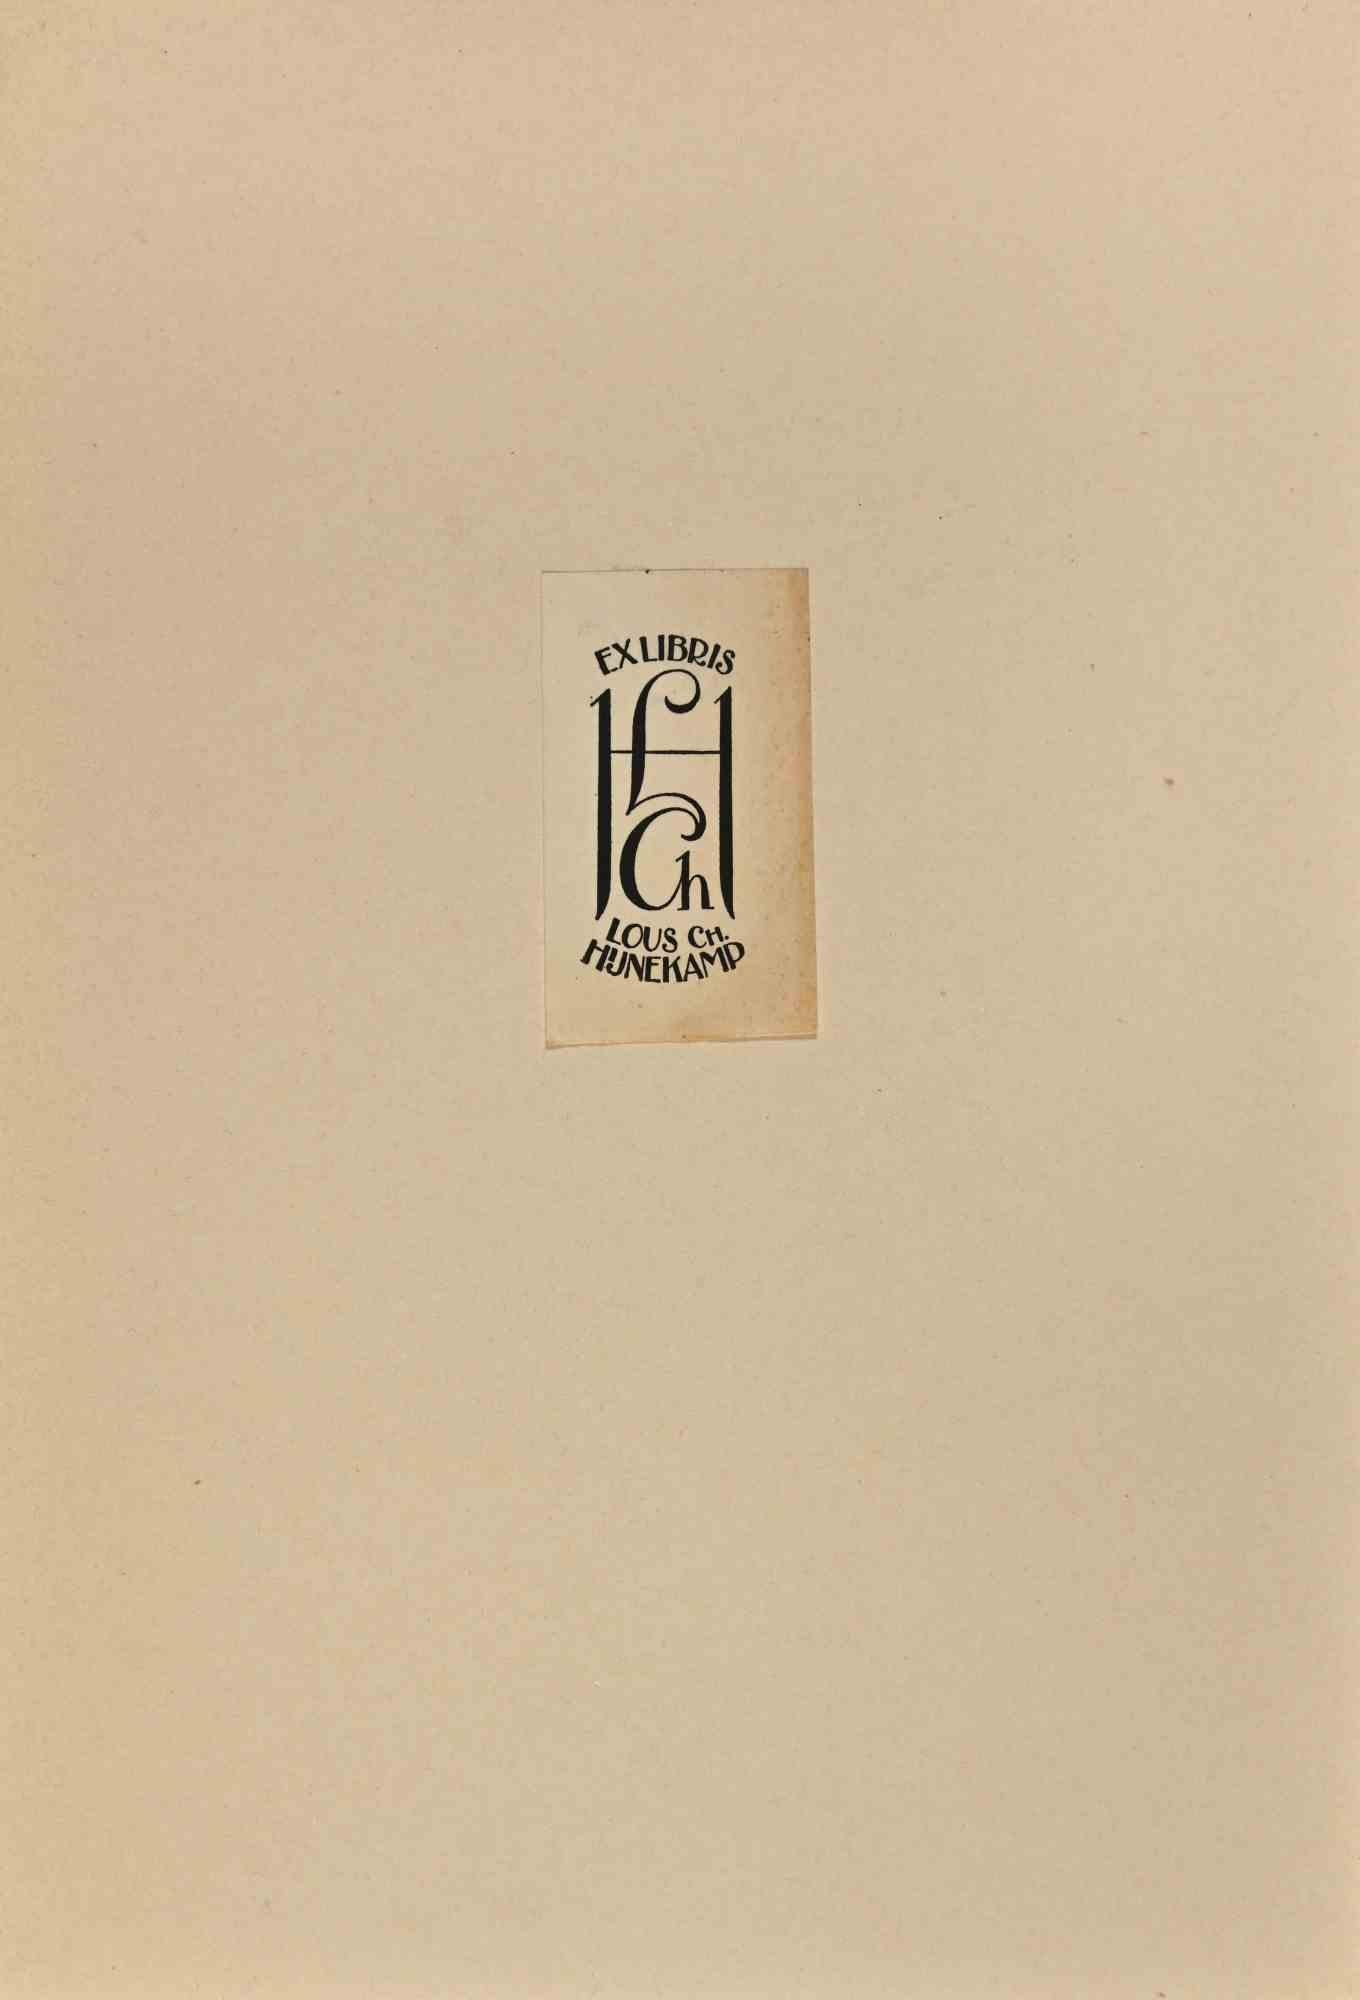  Ex Libris - Lous Ch. Huekamp - Woodcut - Mid-20th Century - Art by Unknown